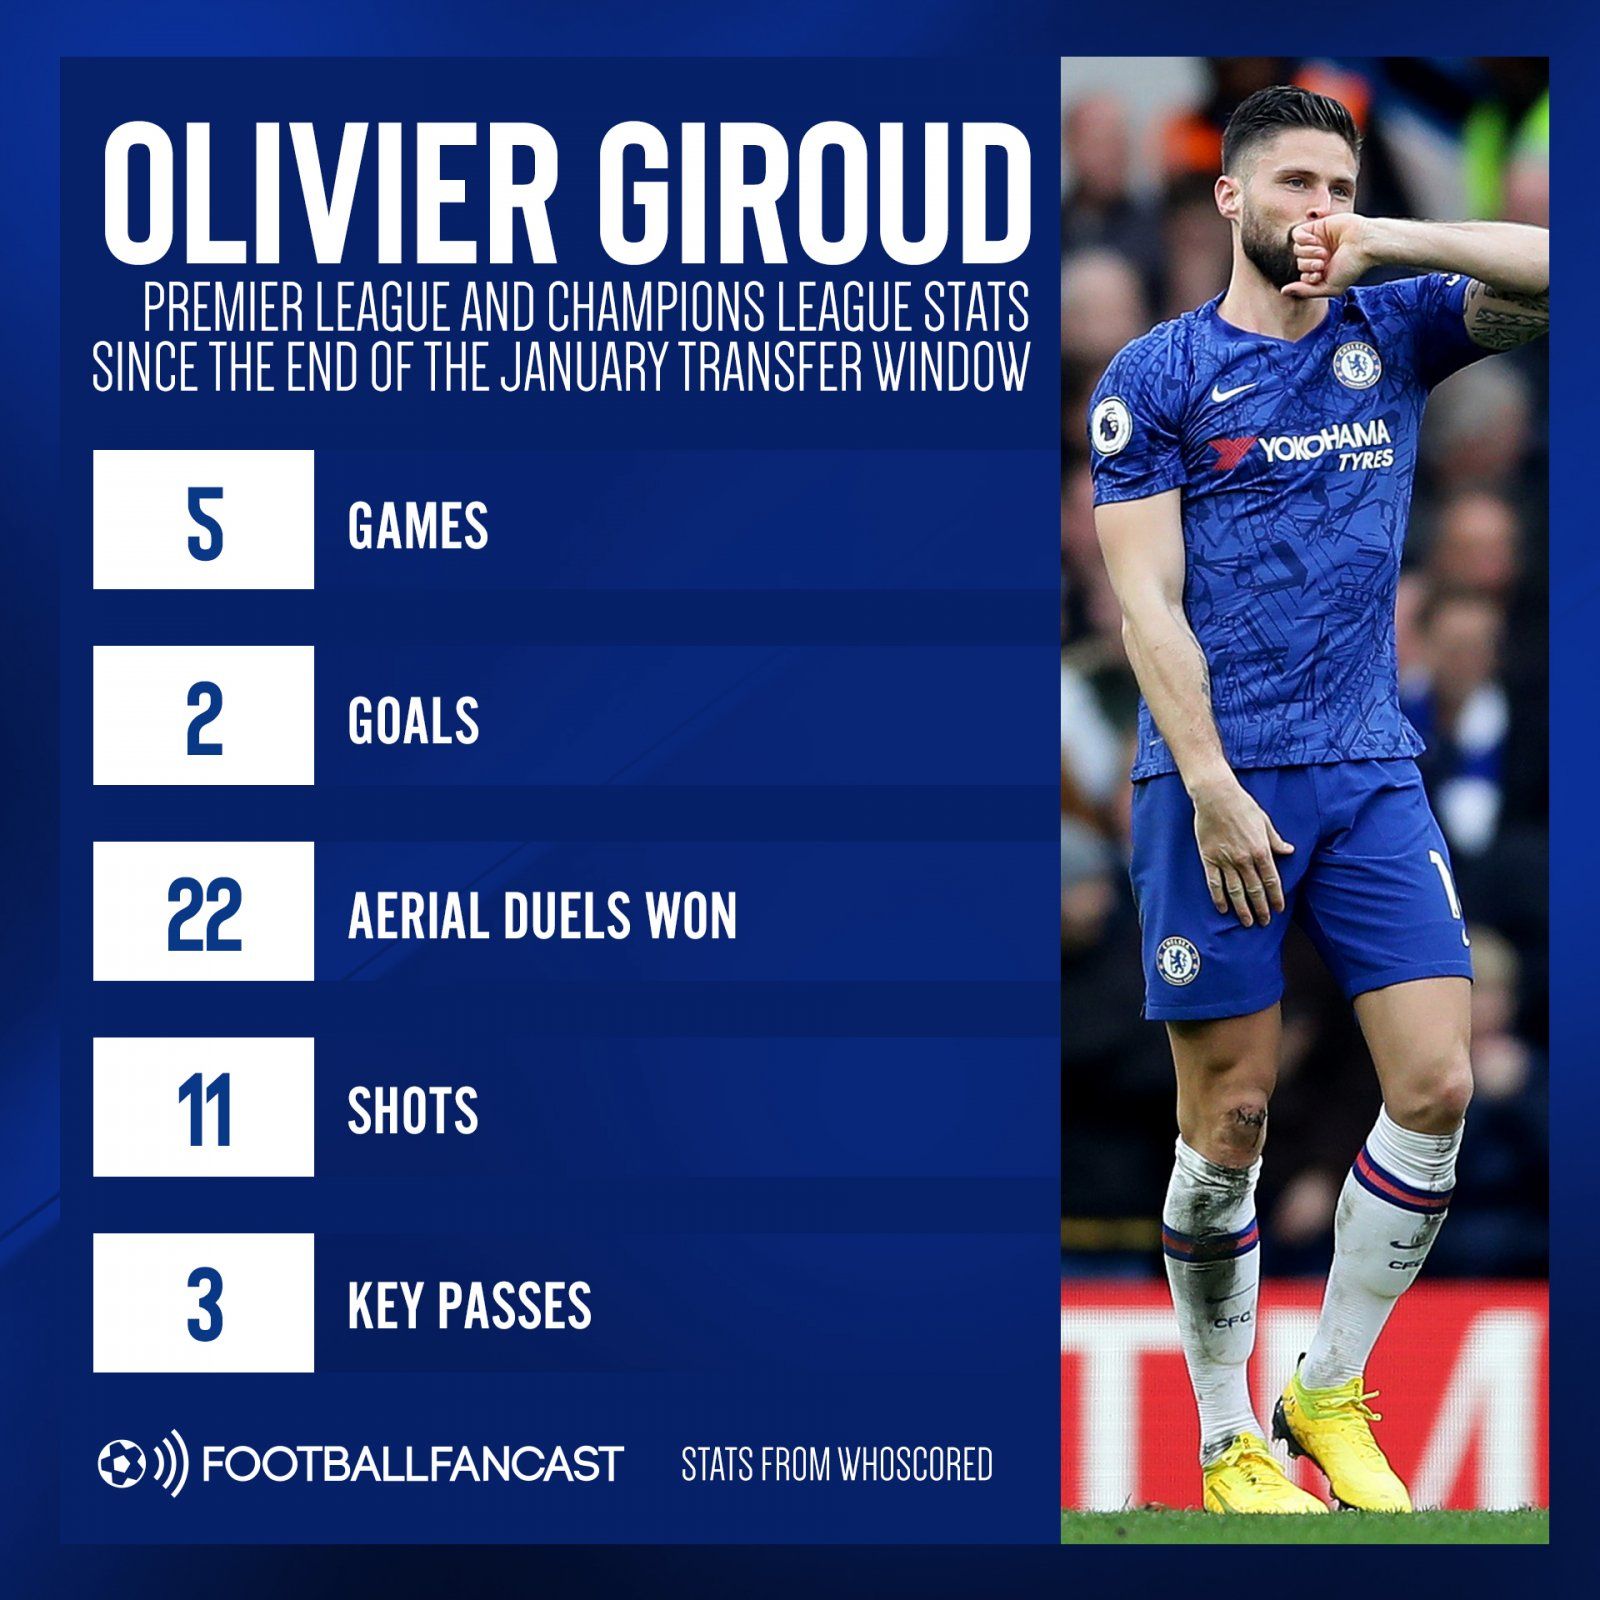 Olivier Giroud's Premier League and Champions League